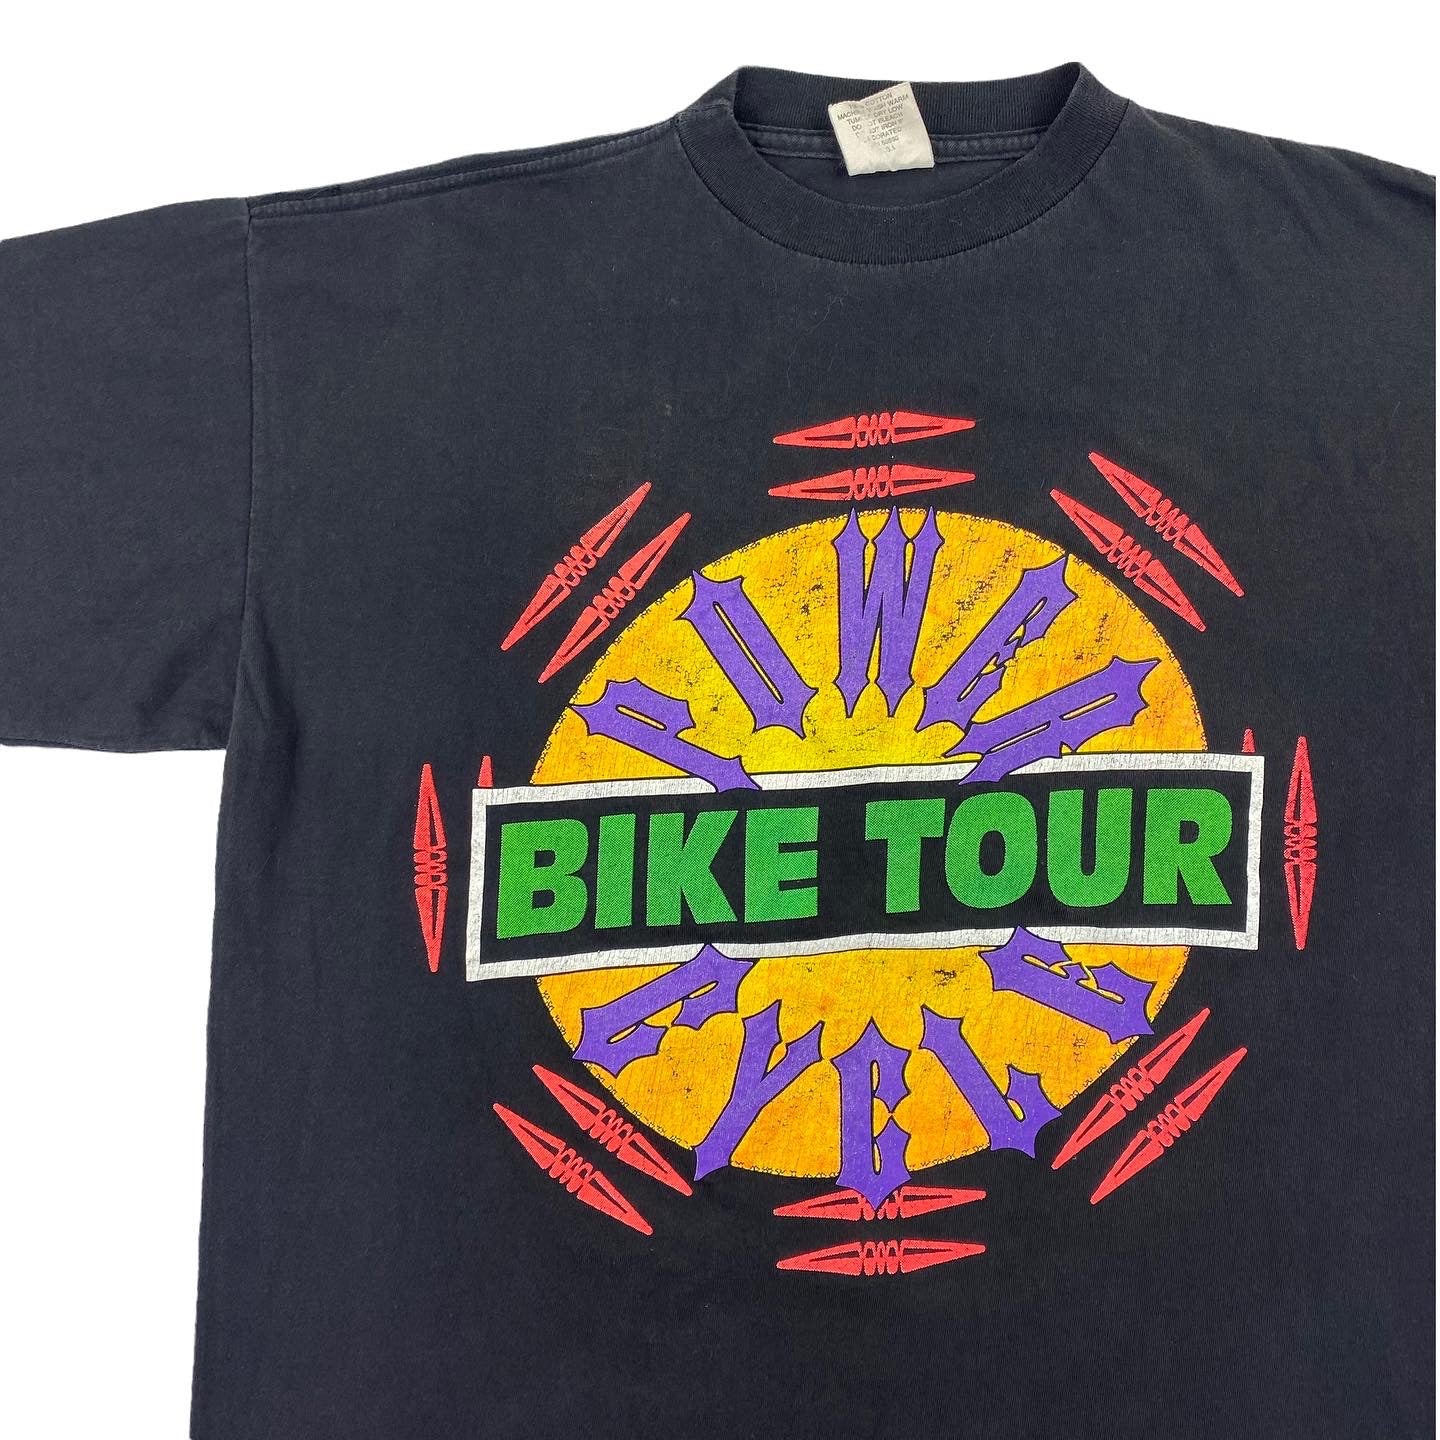 90s power cycle bike tour tee. XL